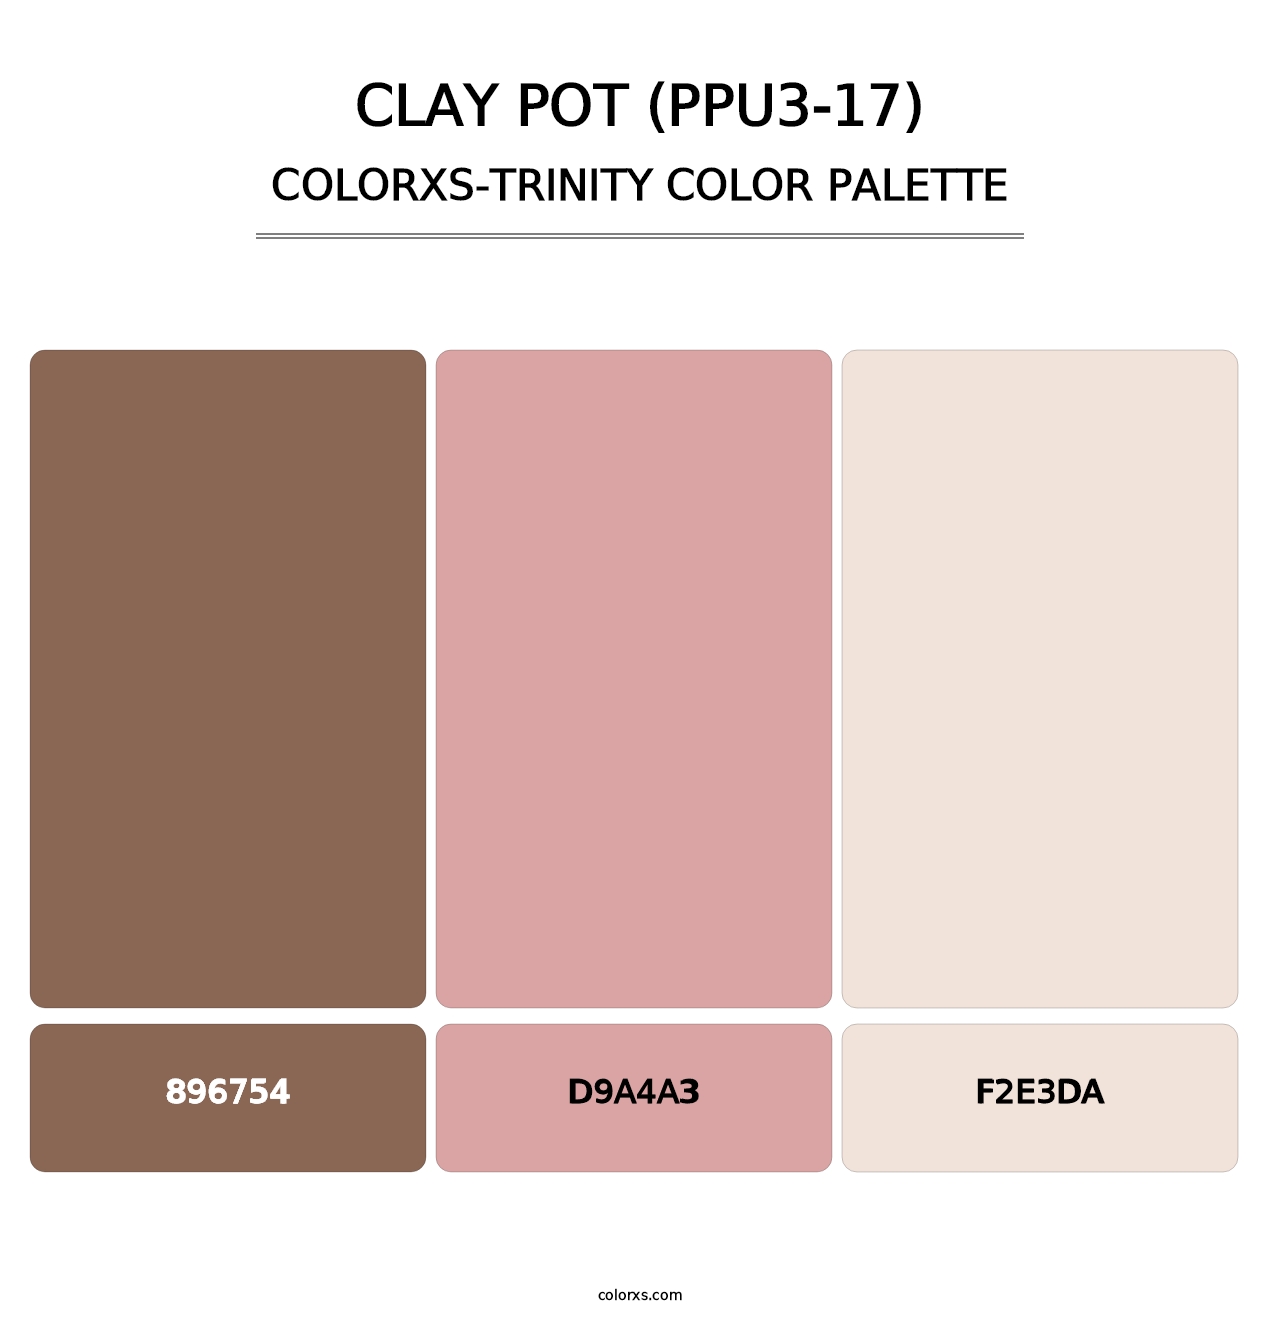 Clay Pot (PPU3-17) - Colorxs Trinity Palette